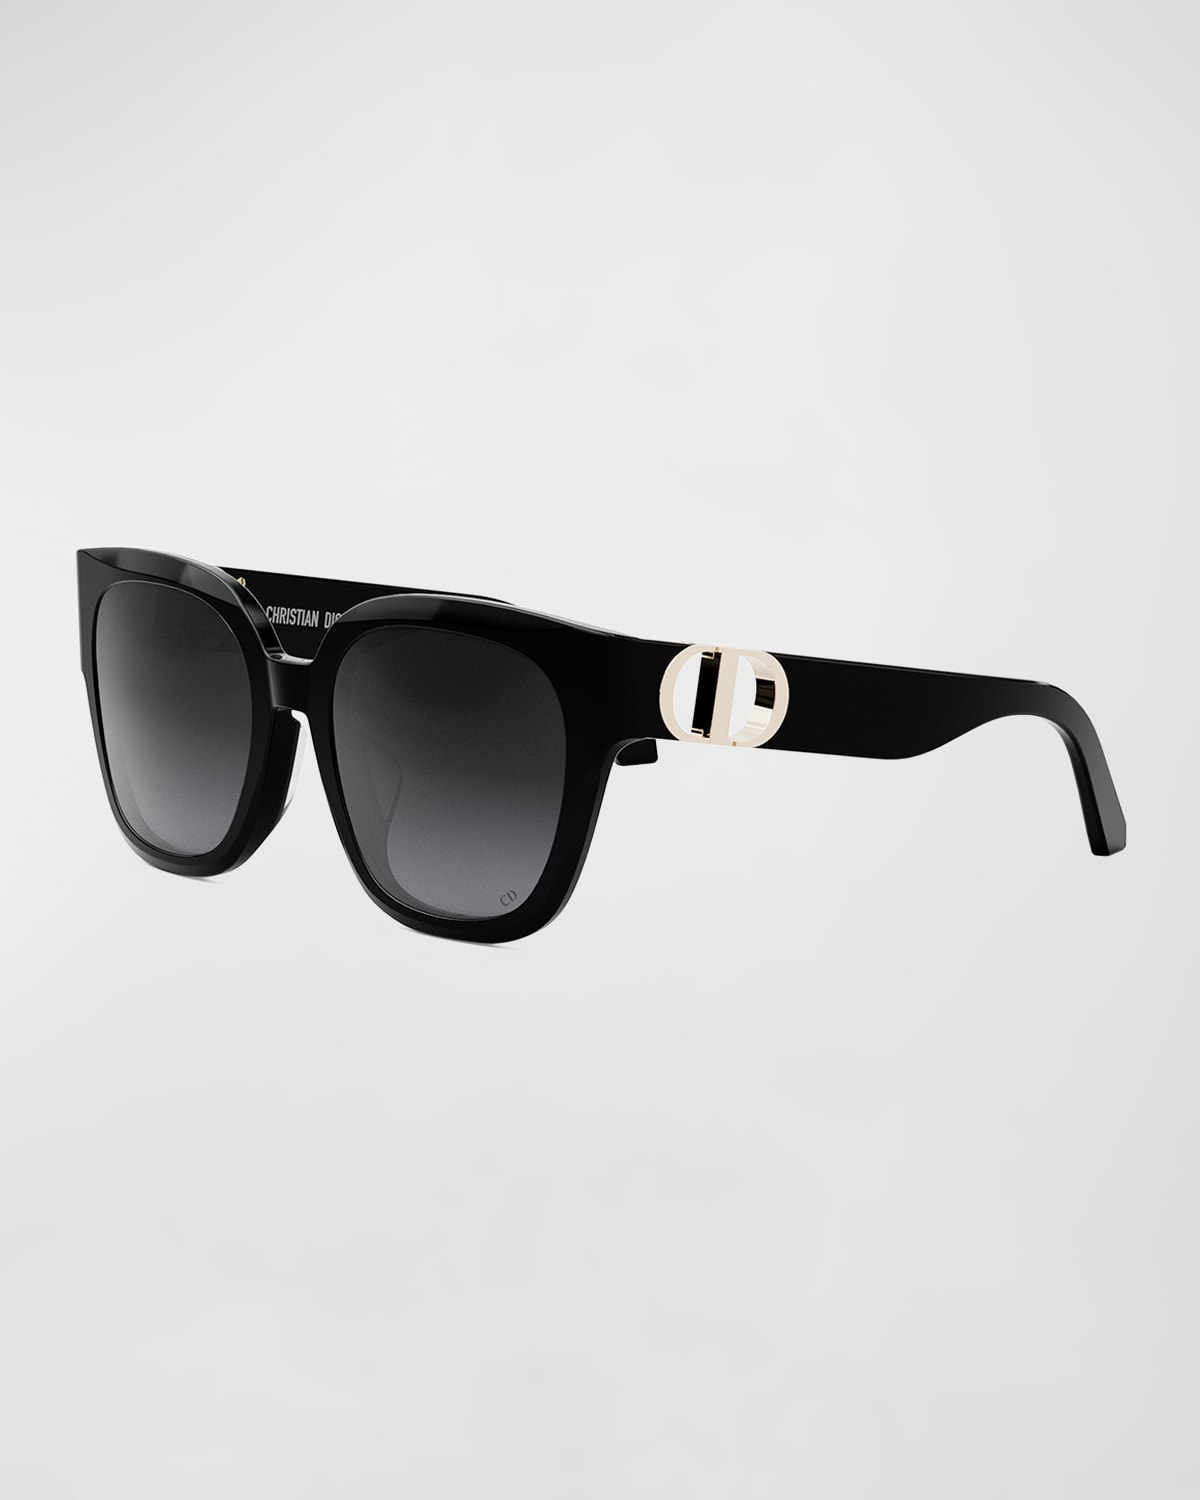 Dior 30montaignw S10f Sunglasses In Black/black Gradient